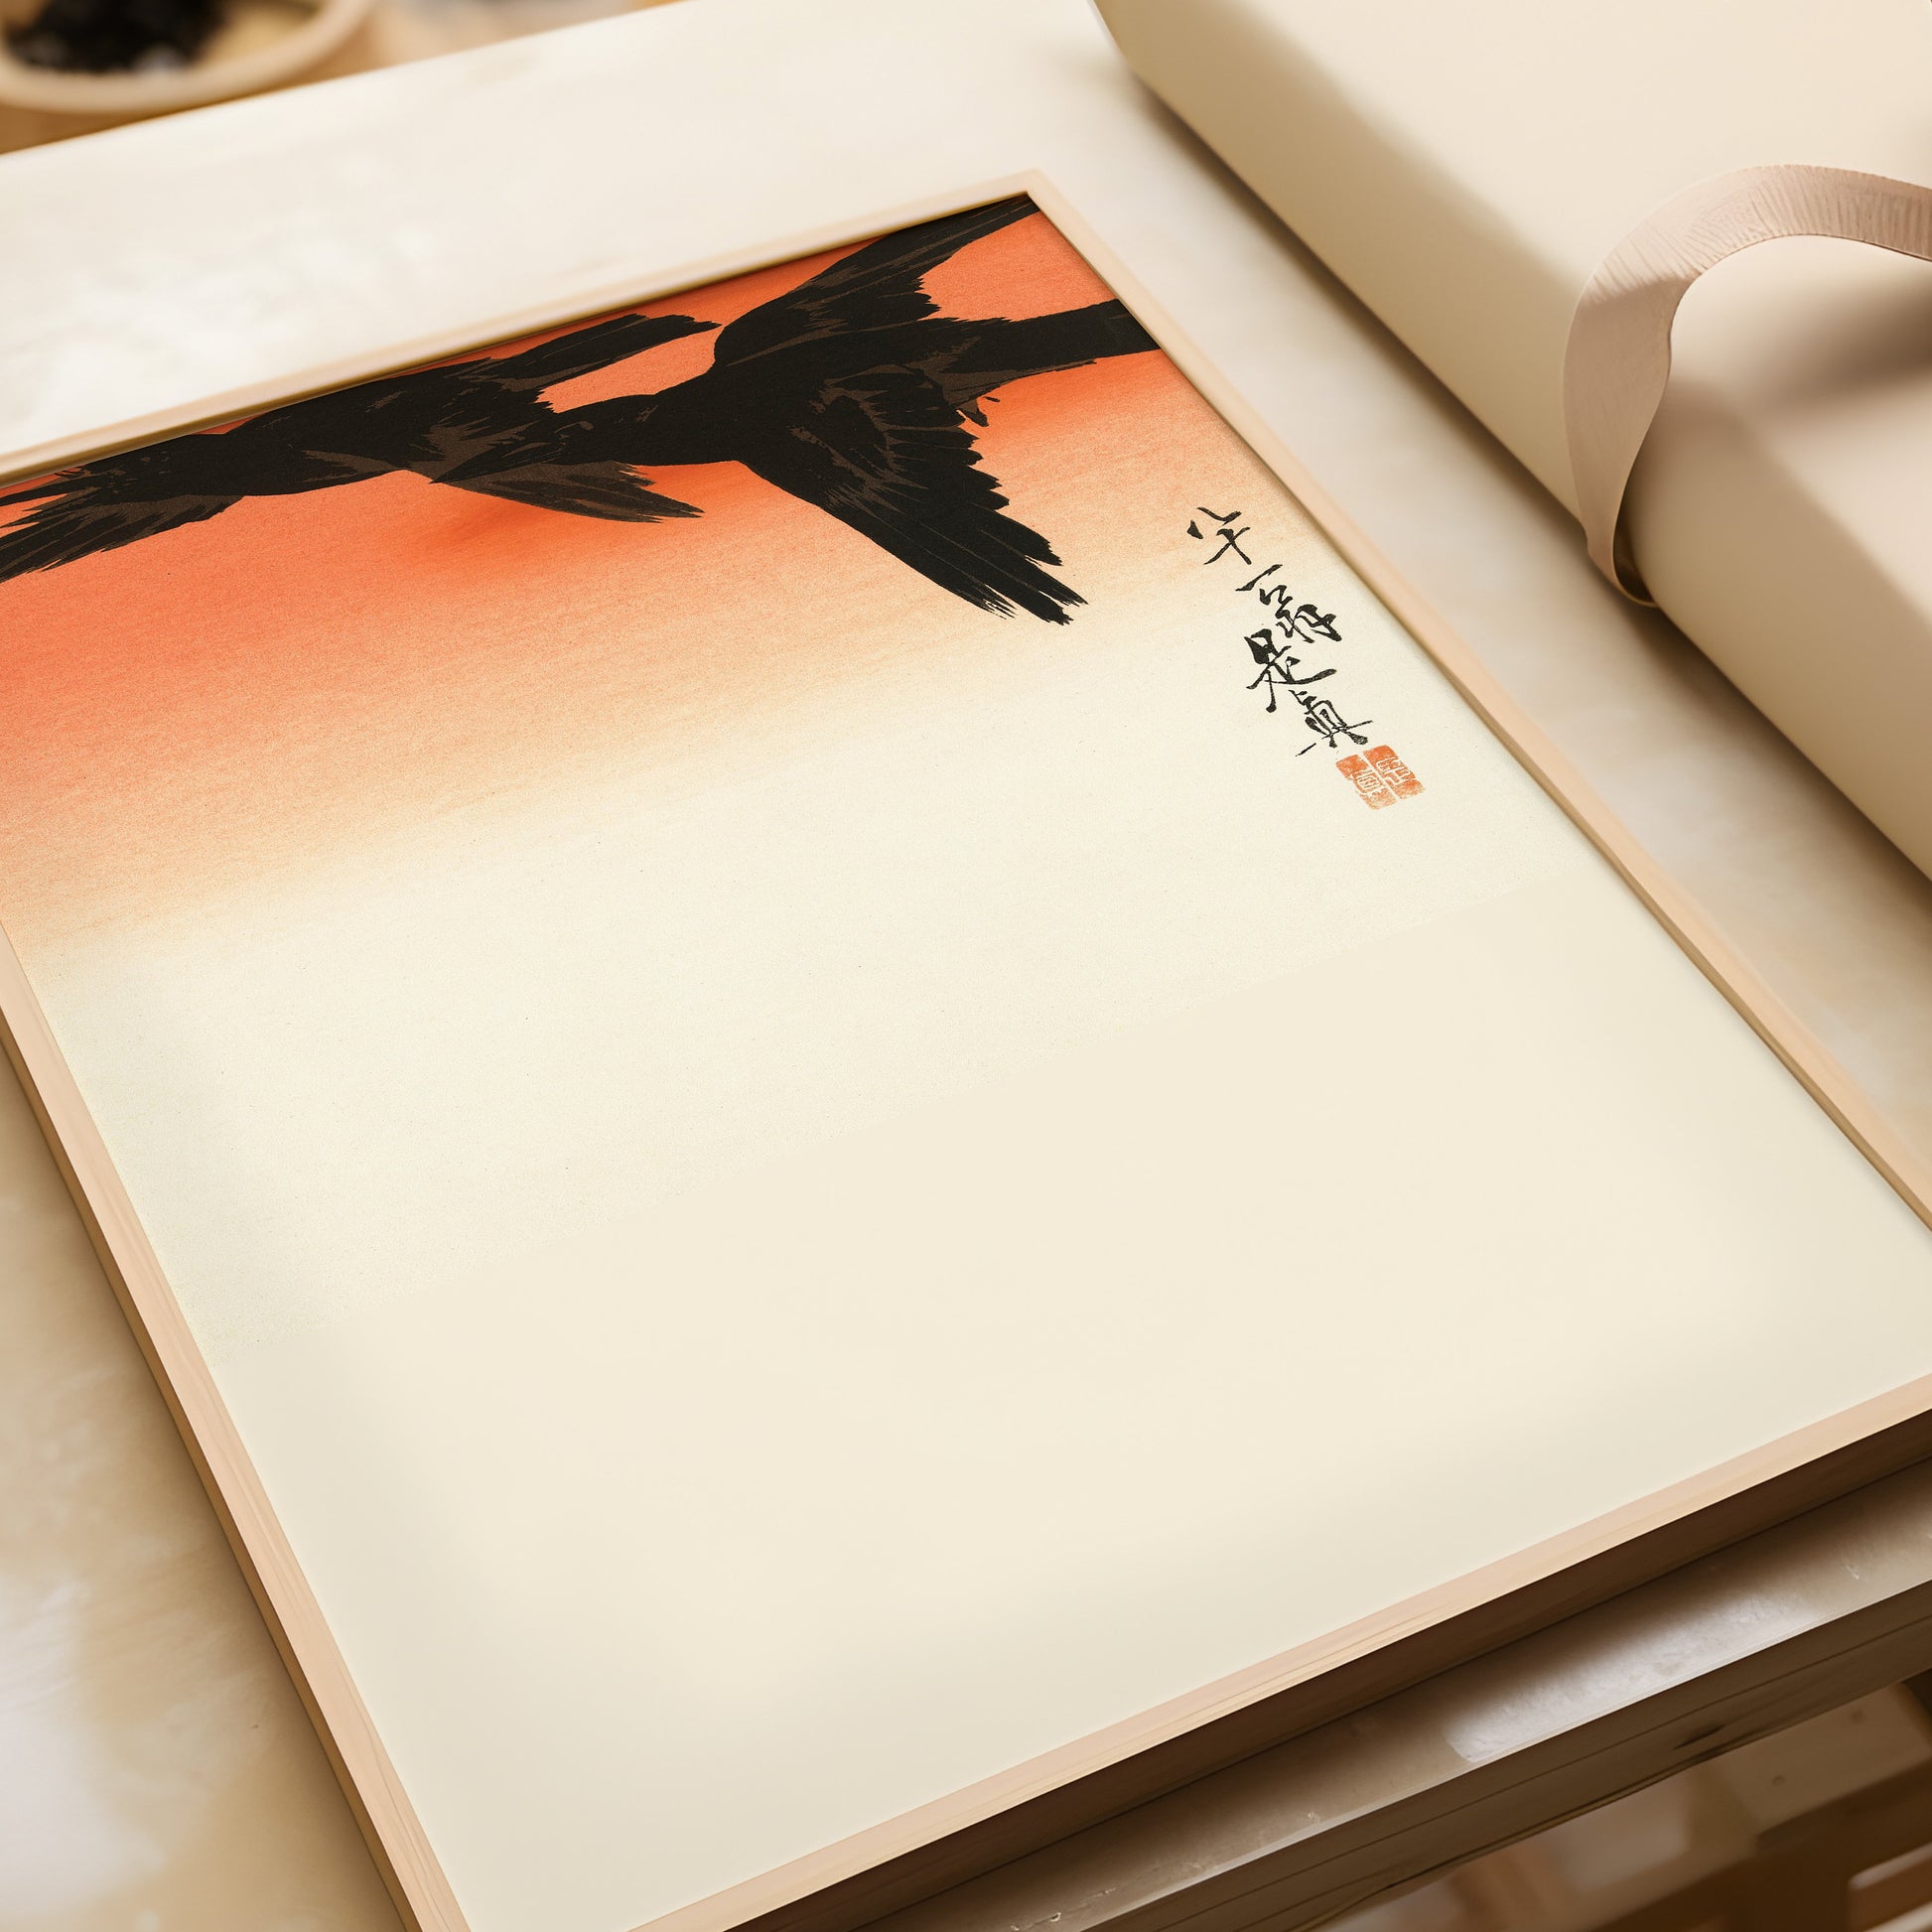 Shibata Zeshin - Crows at Dusk | Vintage Japanese Woodblock Art (available framed ready to hang or unframed)